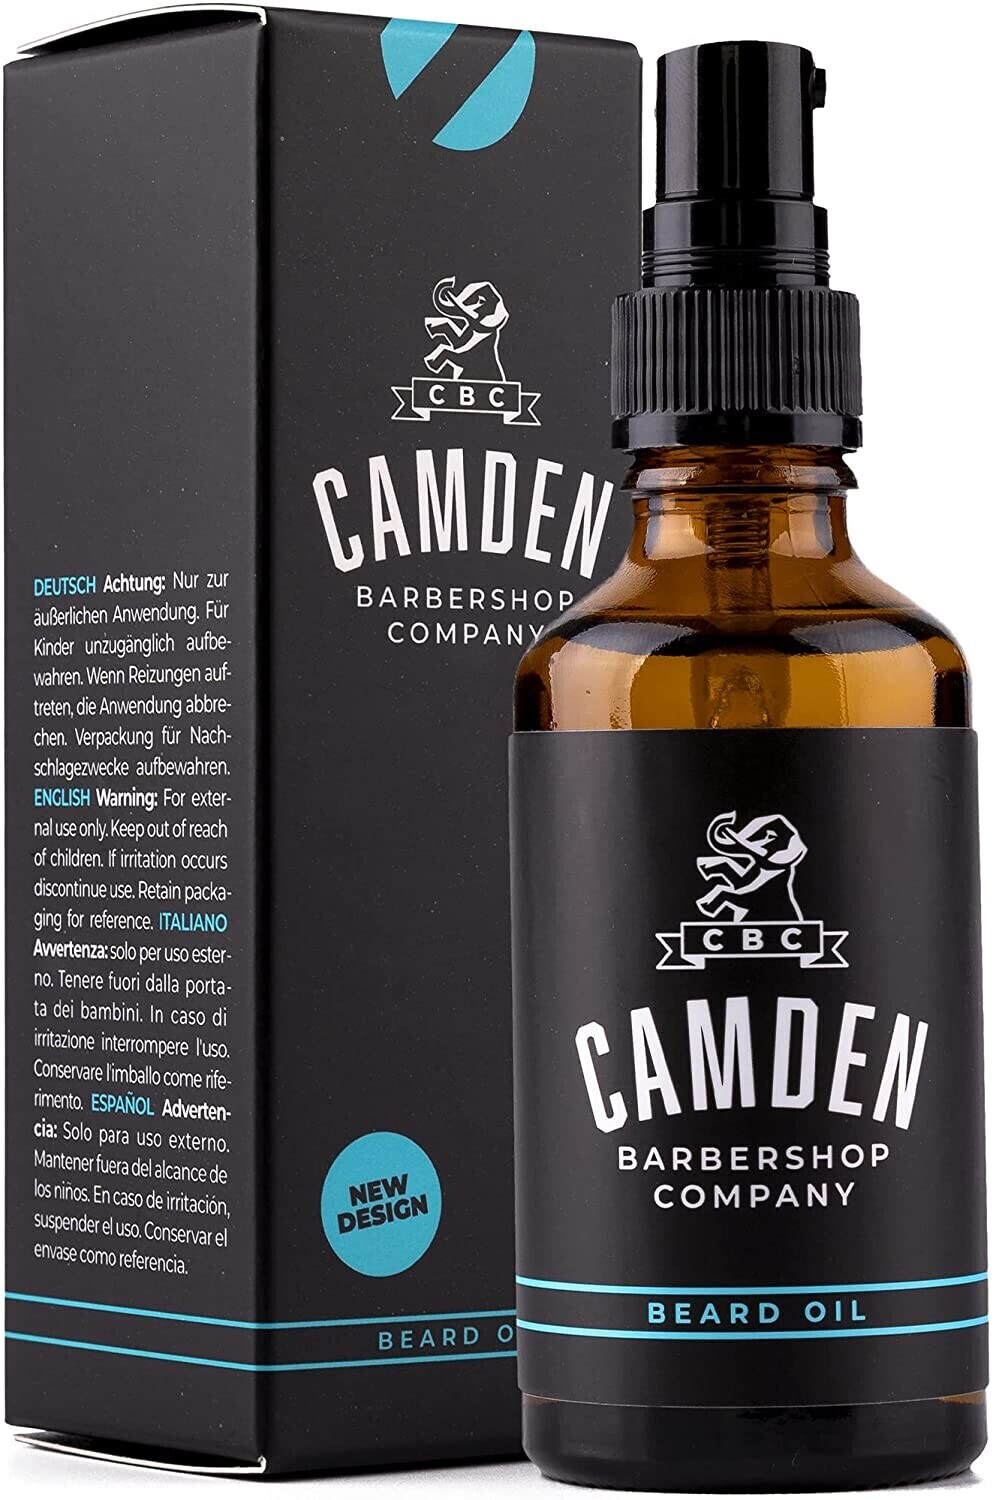 Oil ab 9,99 Camden | bei Company Preisvergleich Original (50ml) Beard Barbershop €